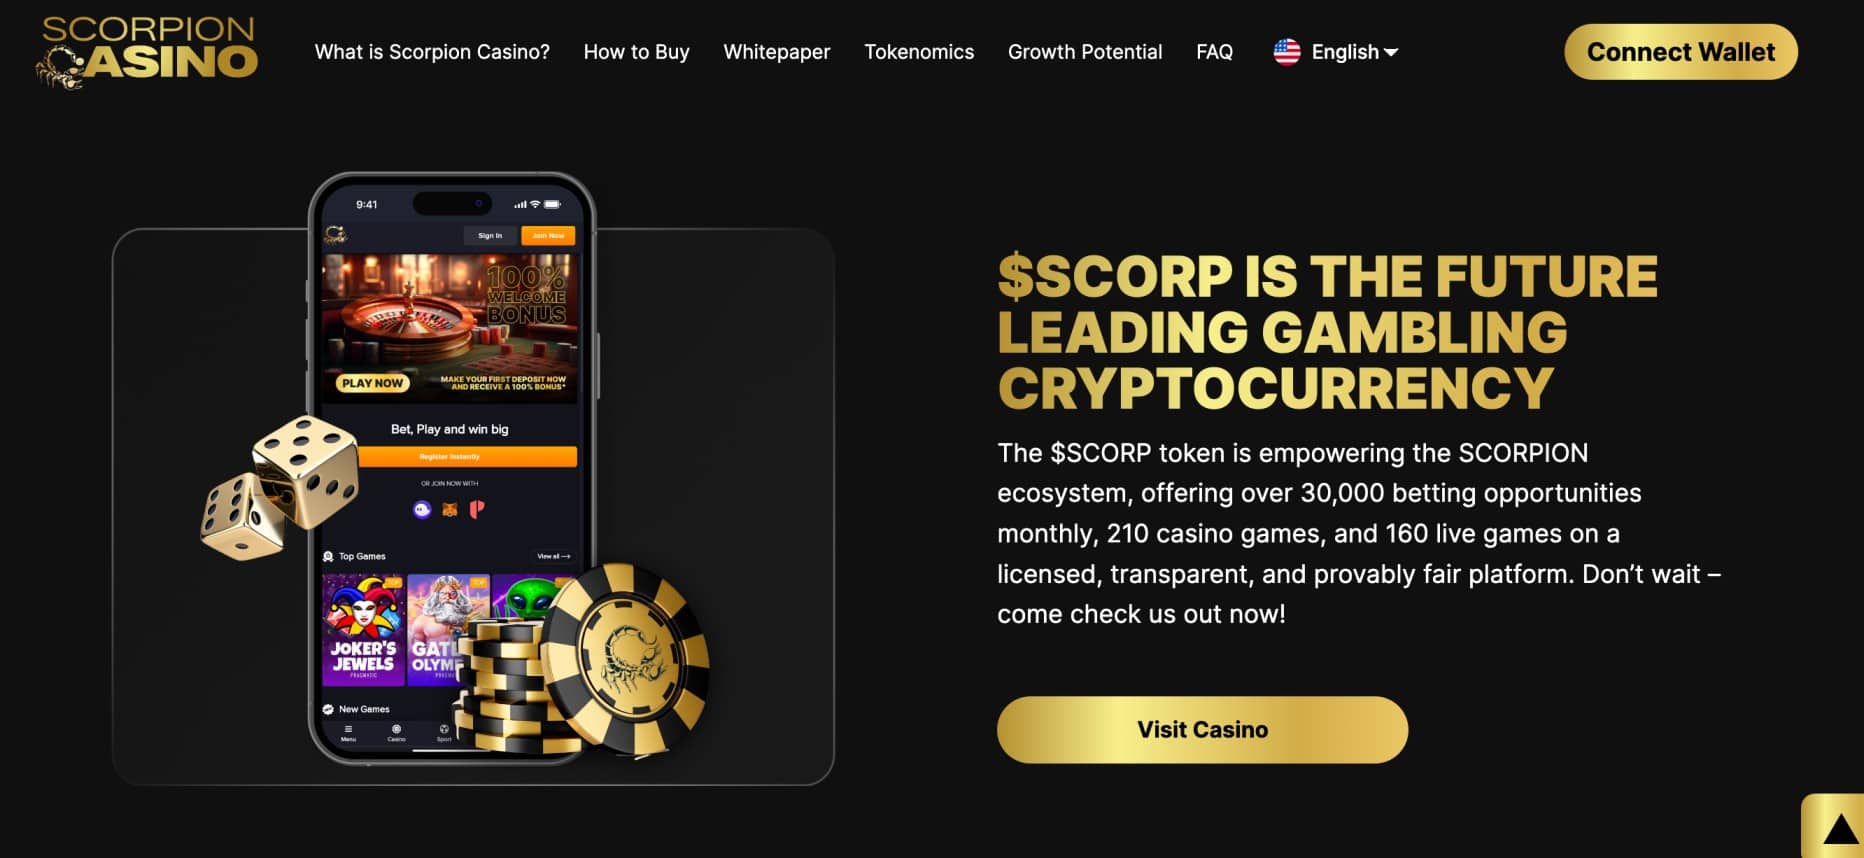 Scorpion Casino review